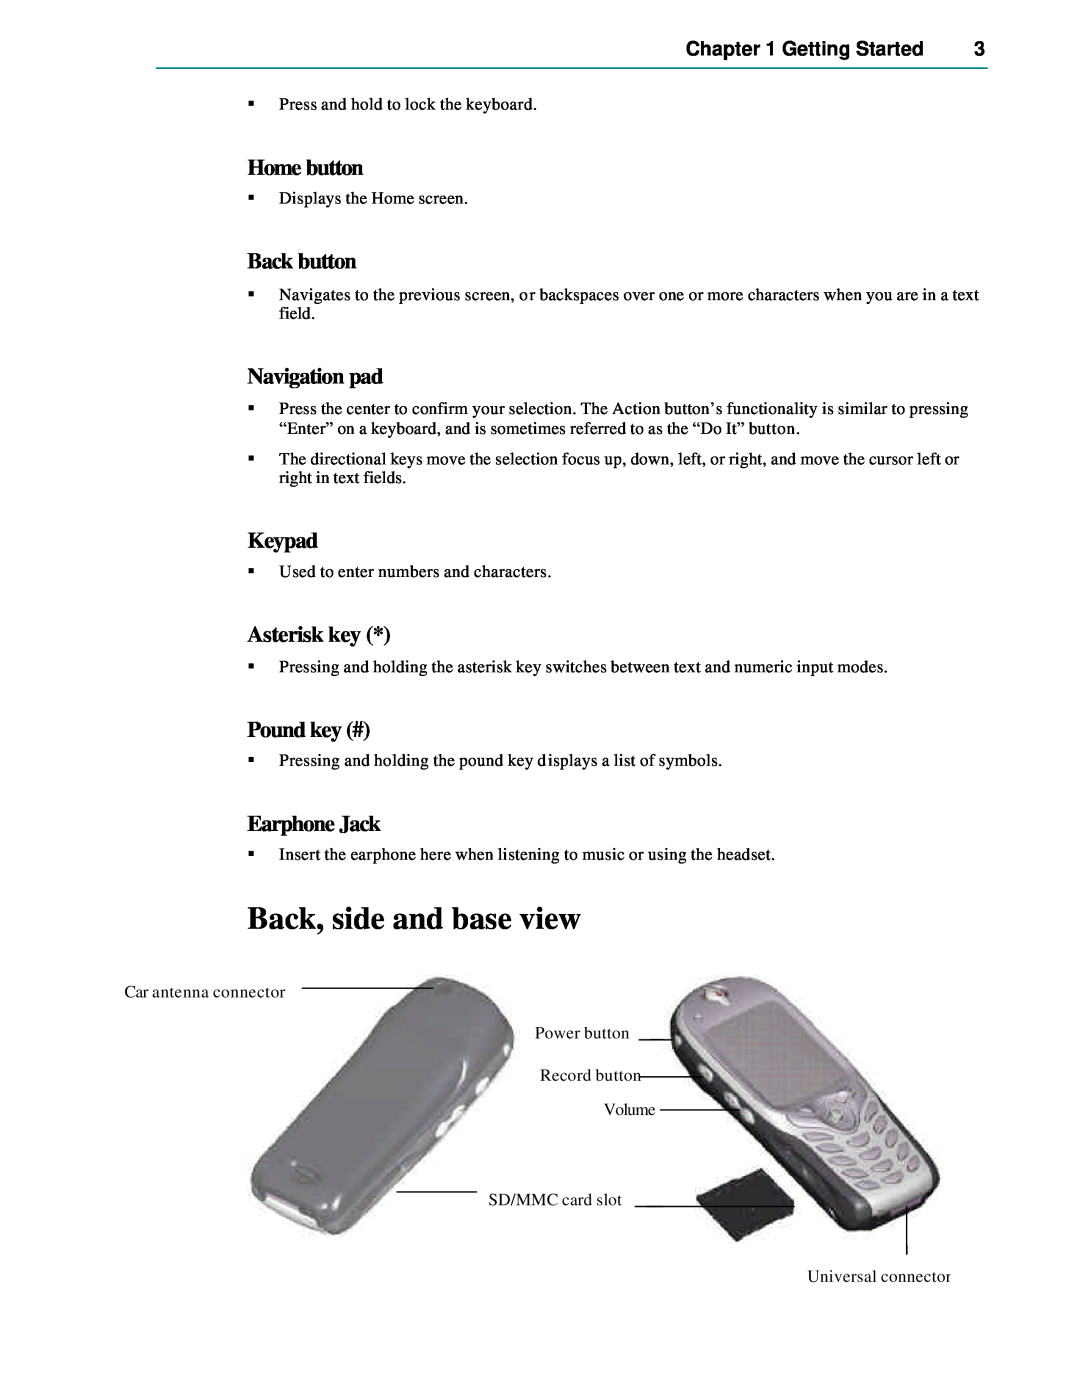 Microsoft Smartphone 2002 manual Back, side and base view, Home button, Back button, Navigation pad, Keypad, Asterisk key 